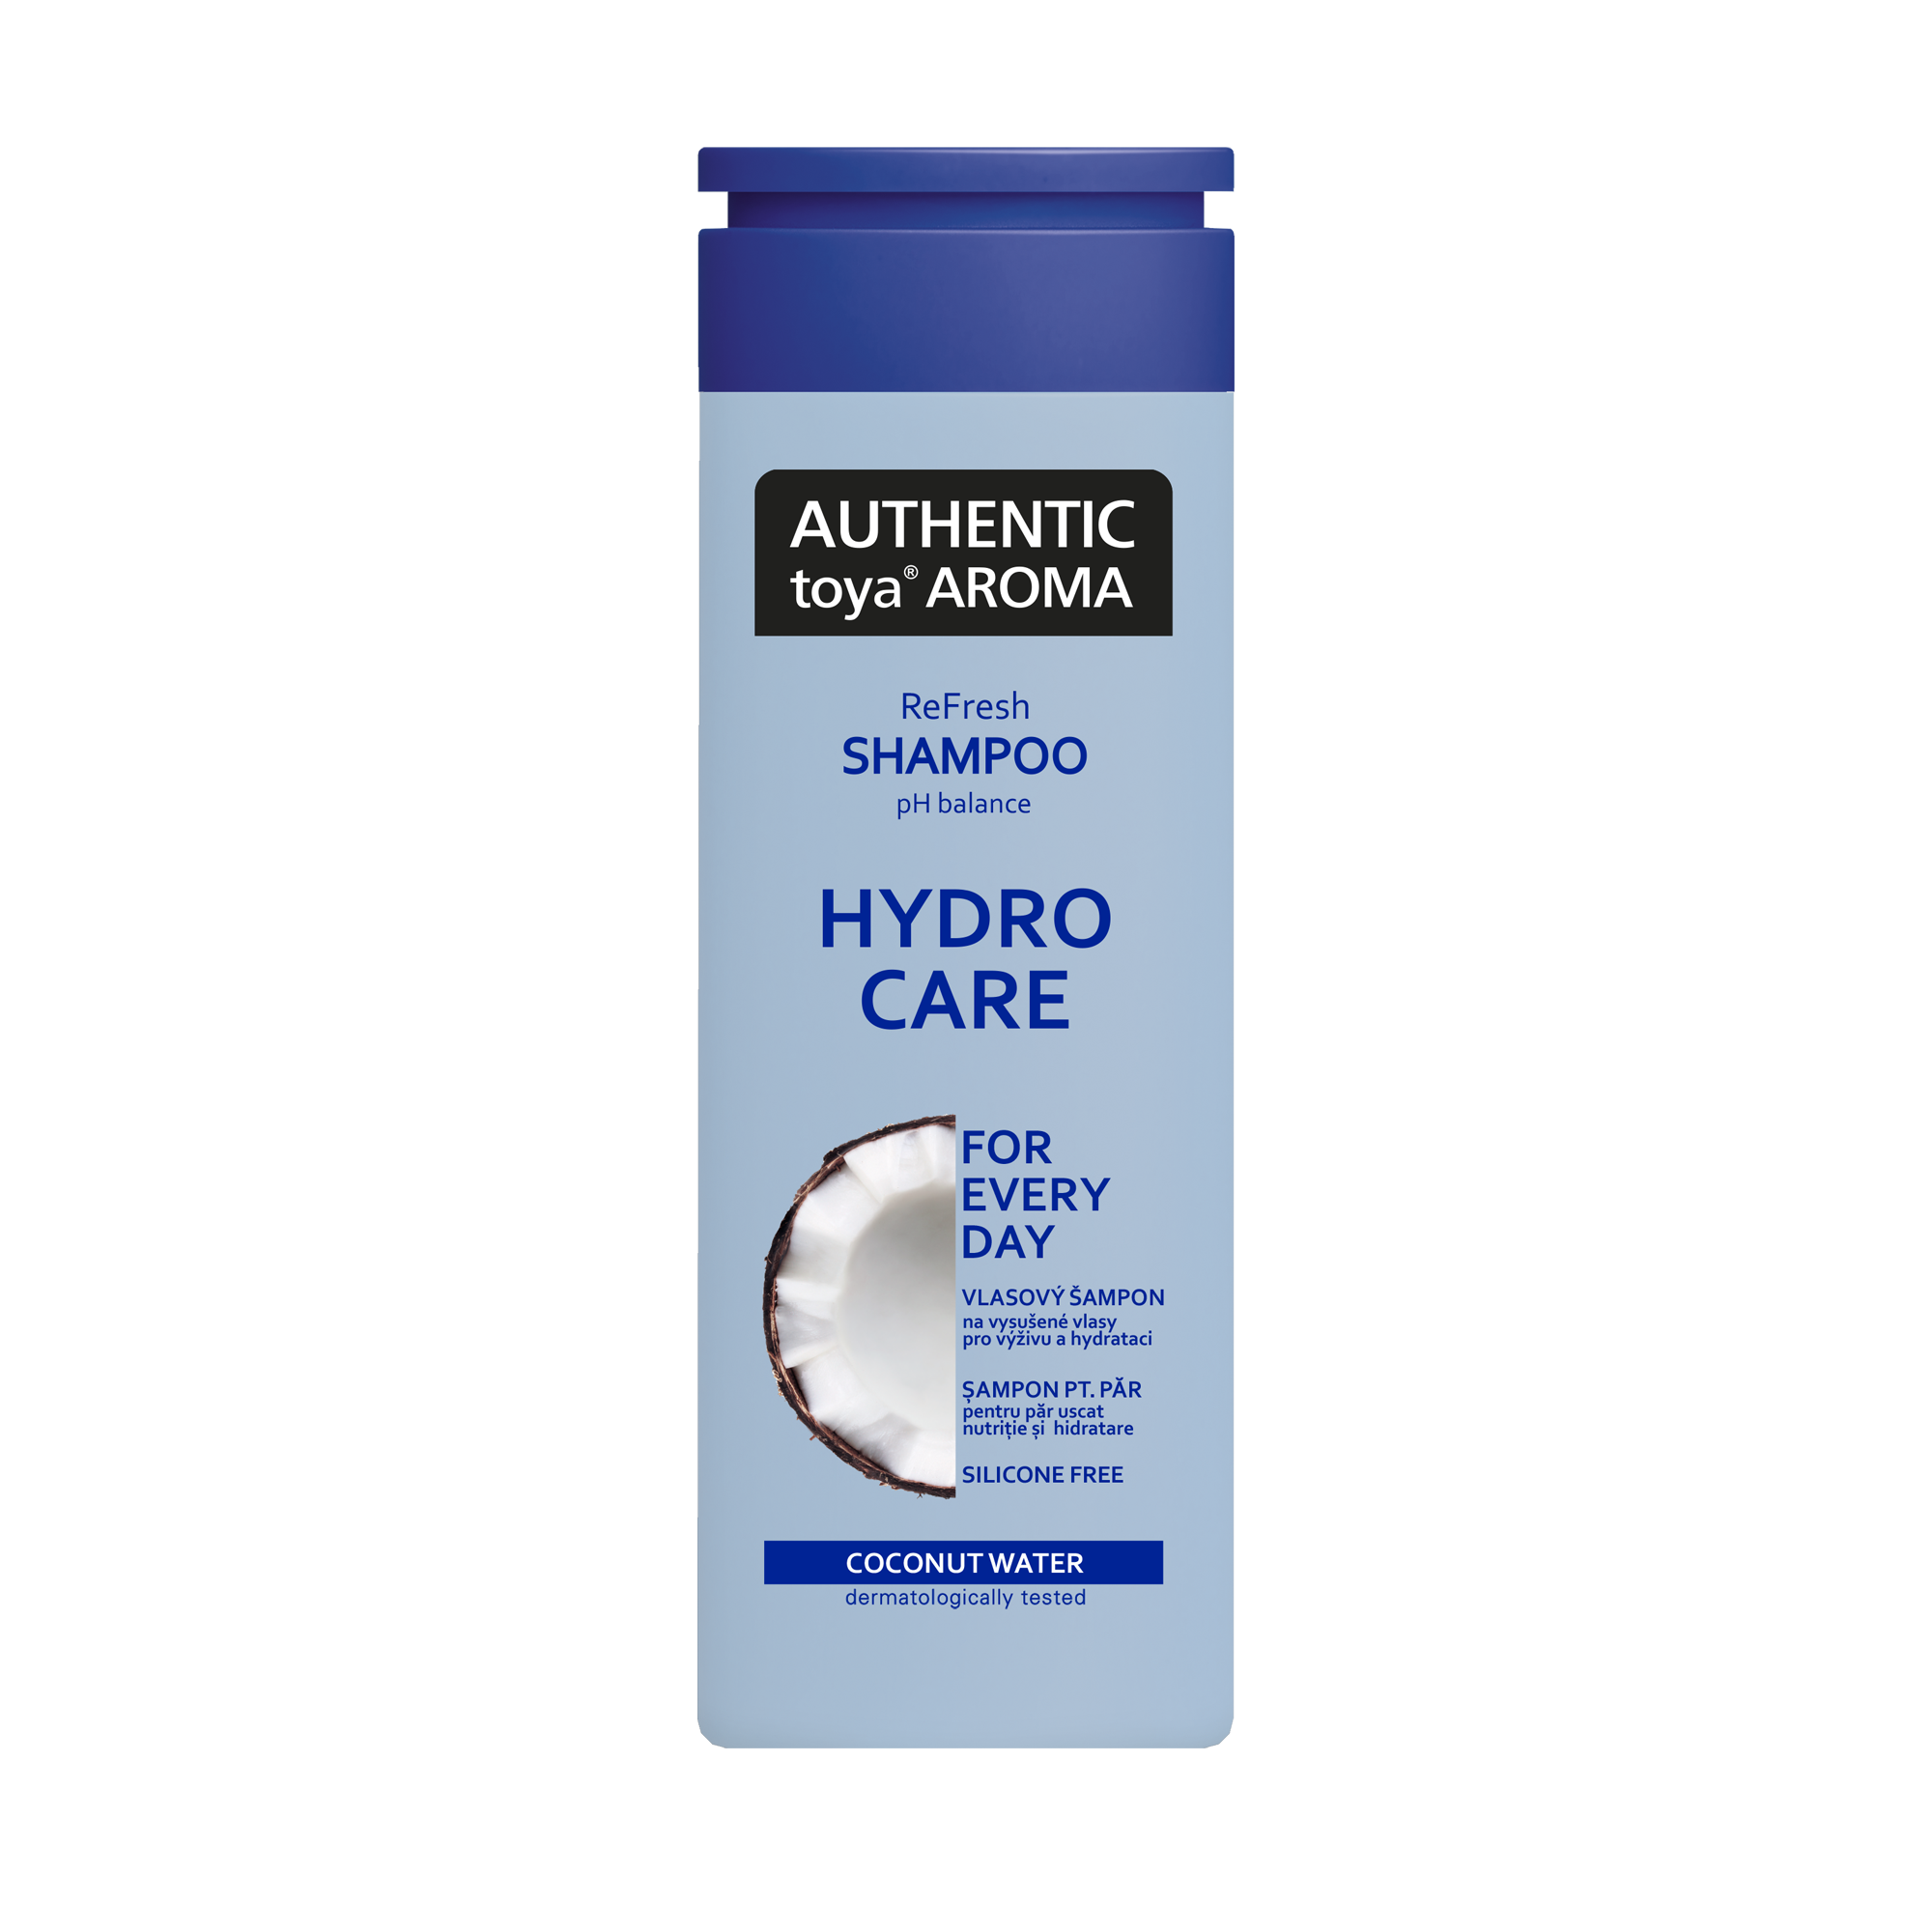 AUTHENTIC toya AROMA Hydro Care shampoo